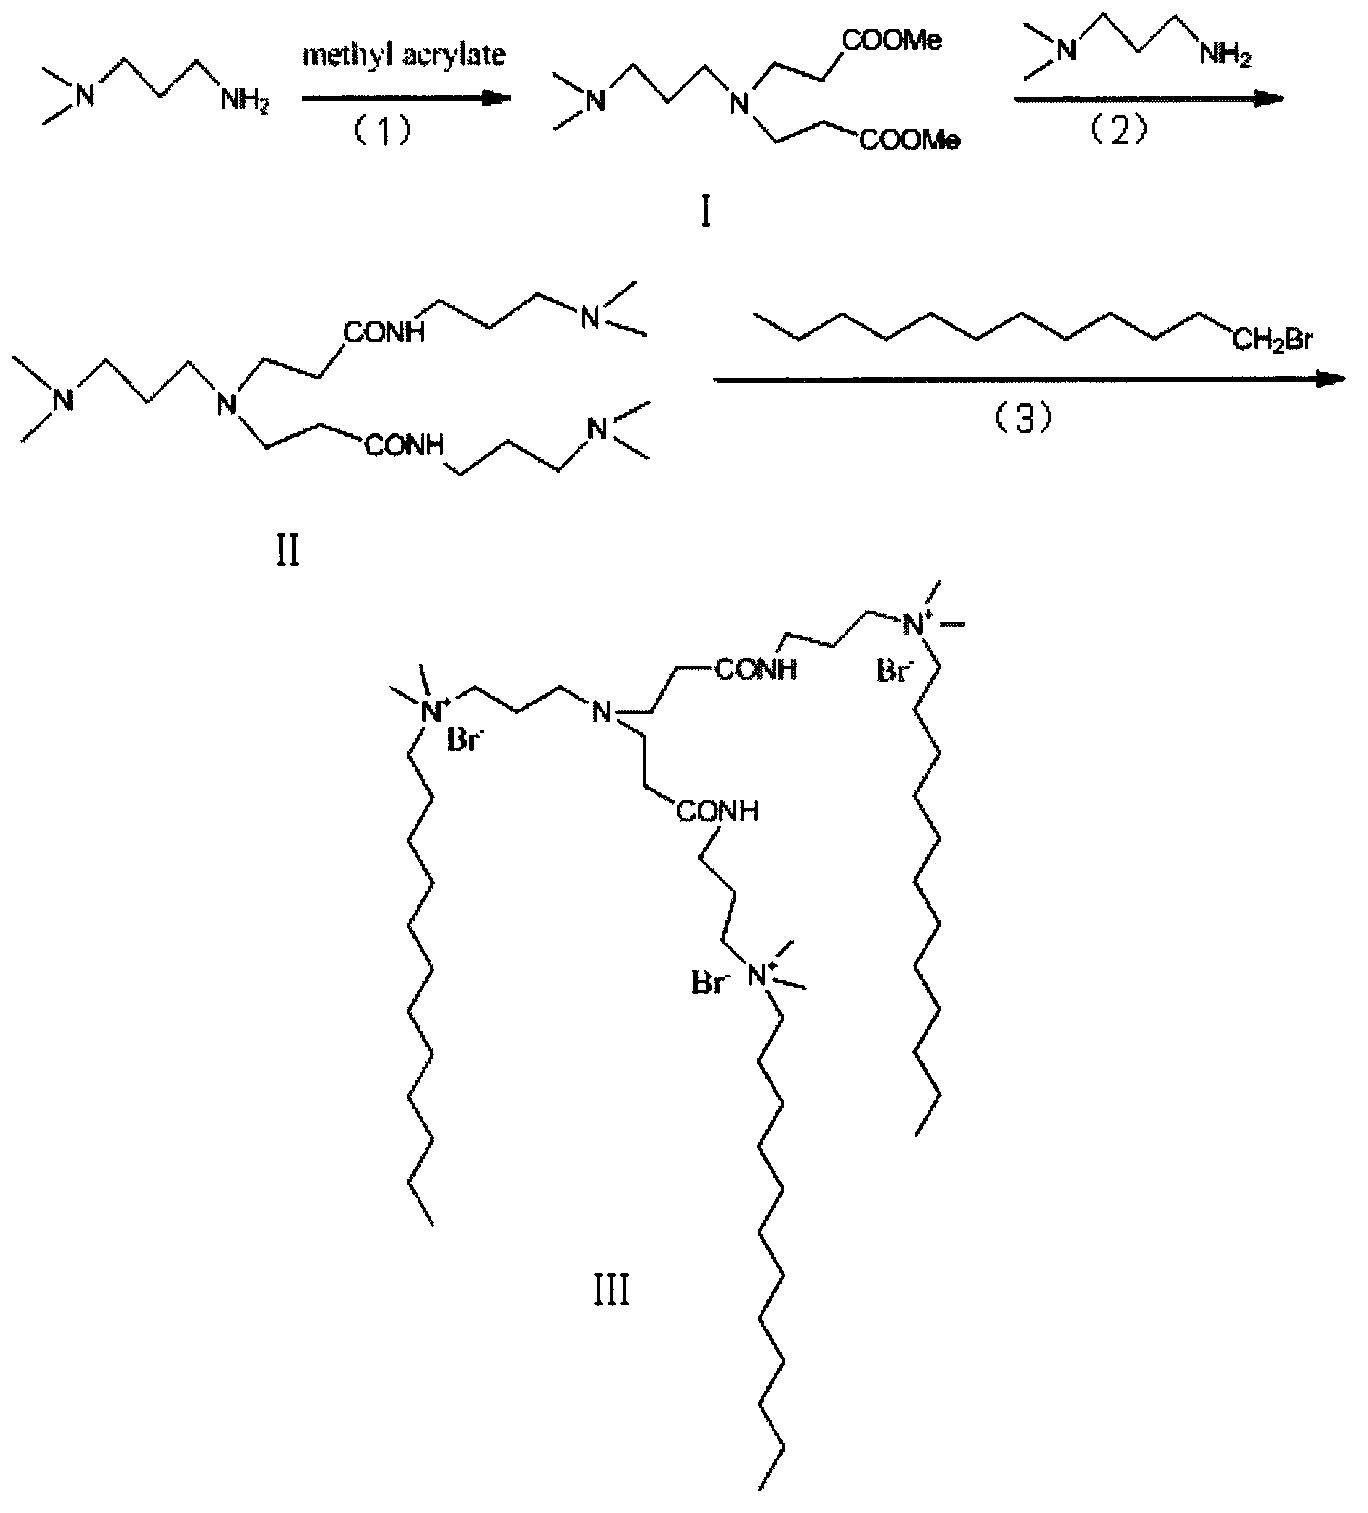 A preparation method for a novel dendritic oligomeric quaternary ammonium surfactant